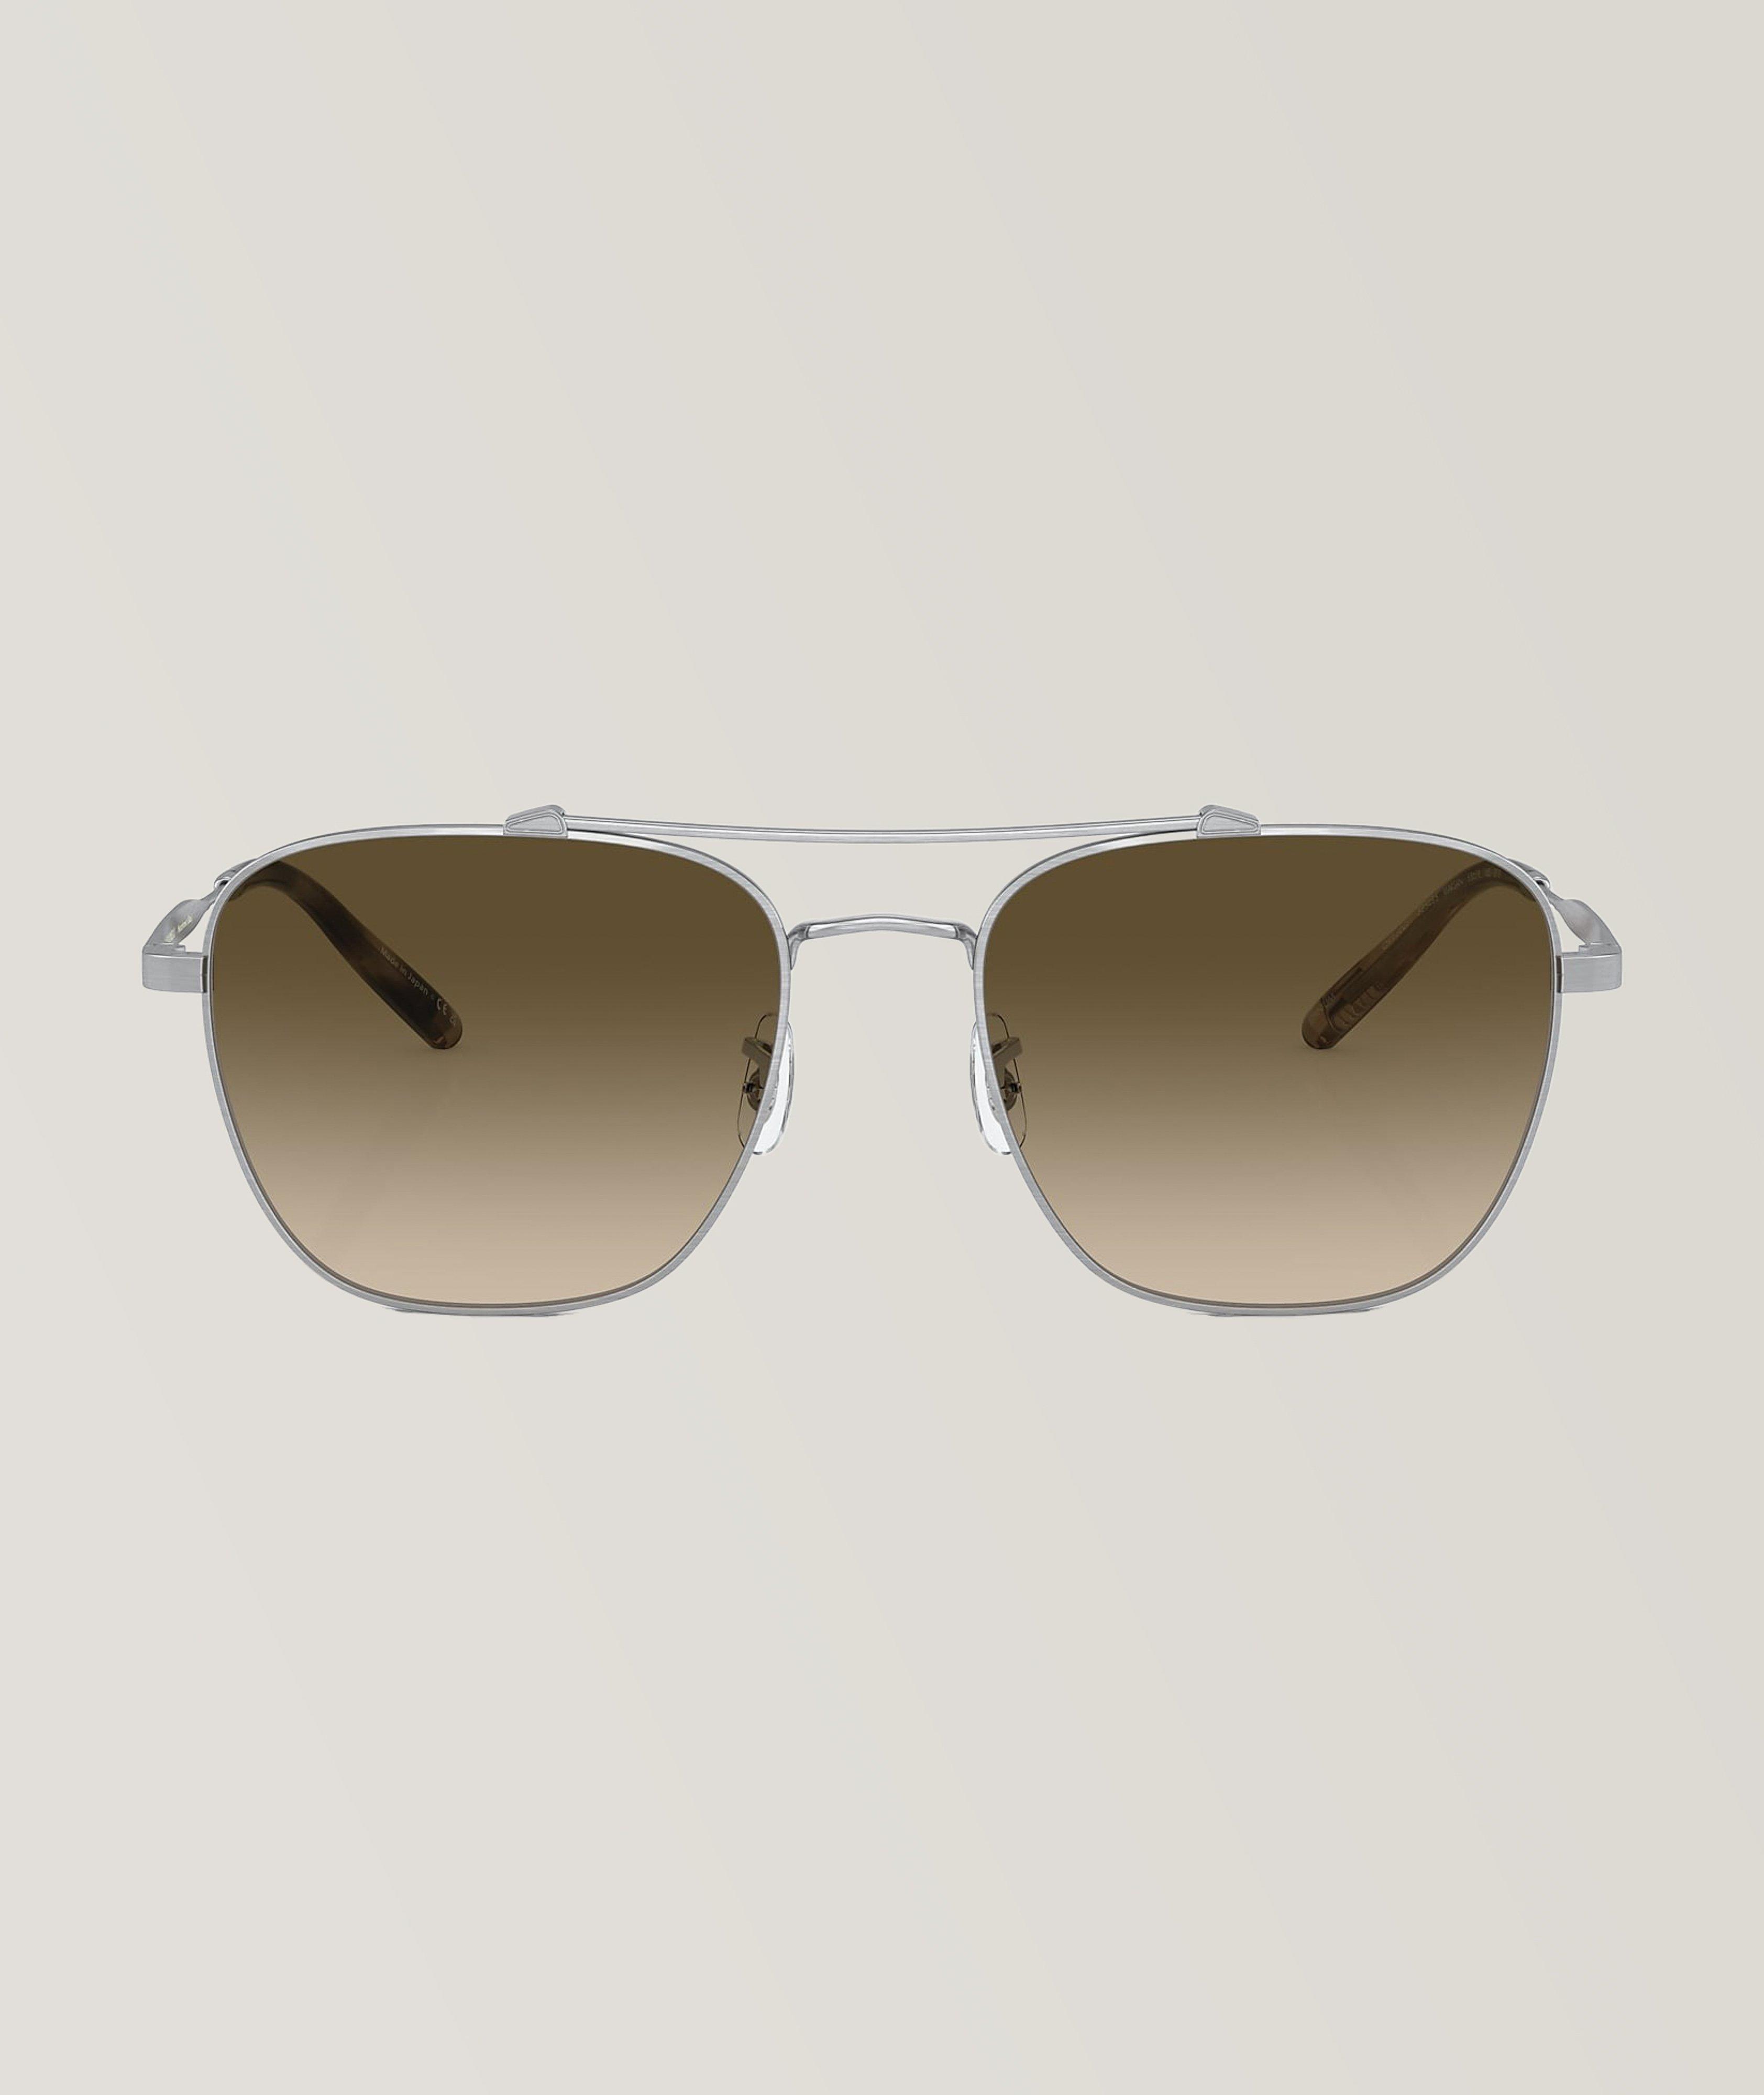 Oliver Peoples Collab Marsan Sunglasses image 1